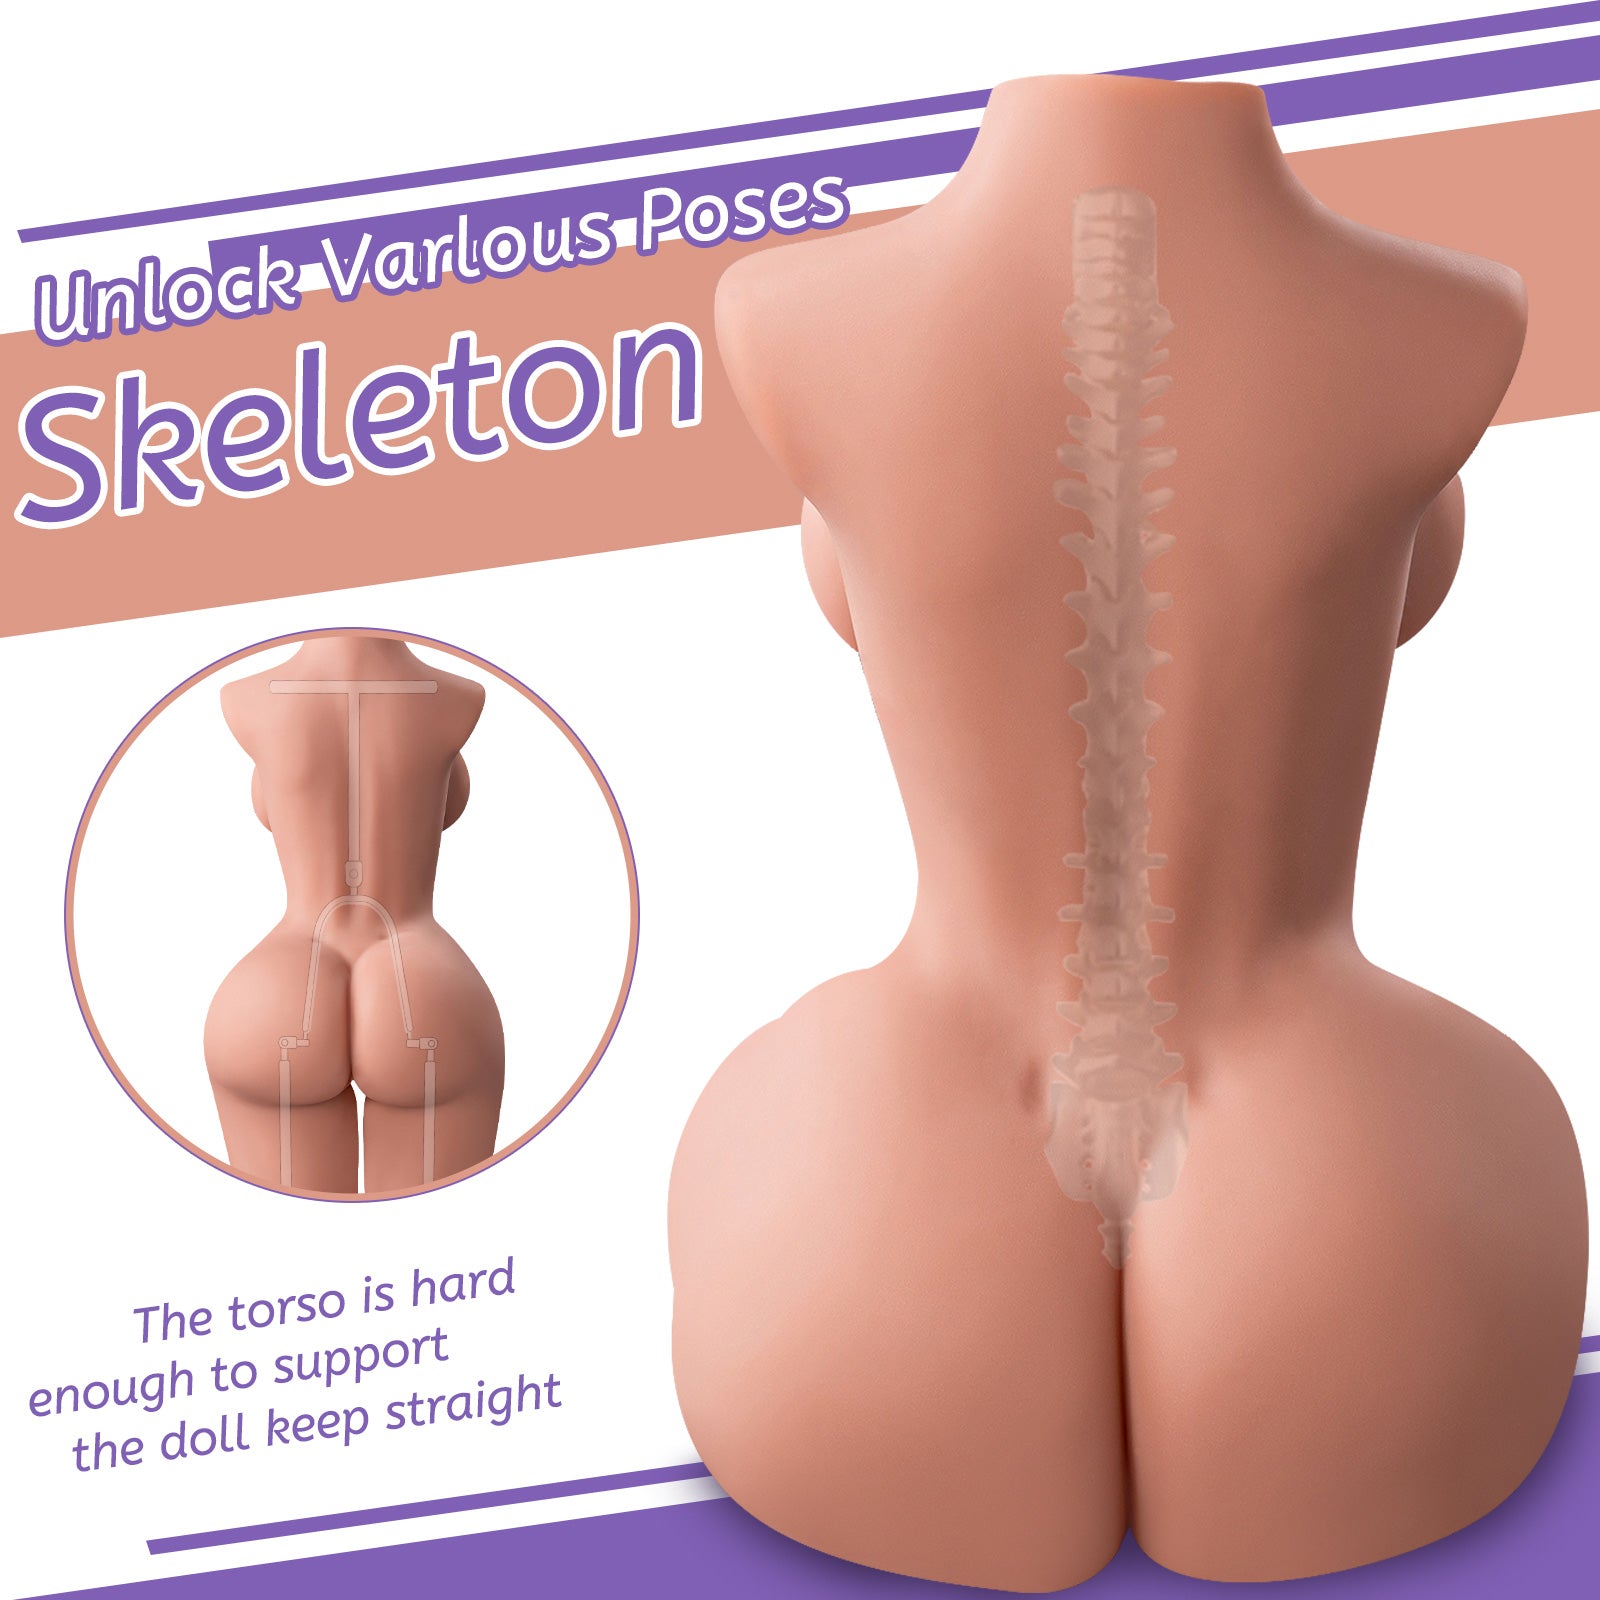 18.29lb 3D big breasts fat ass male masturbation sex doll realistic tight anus